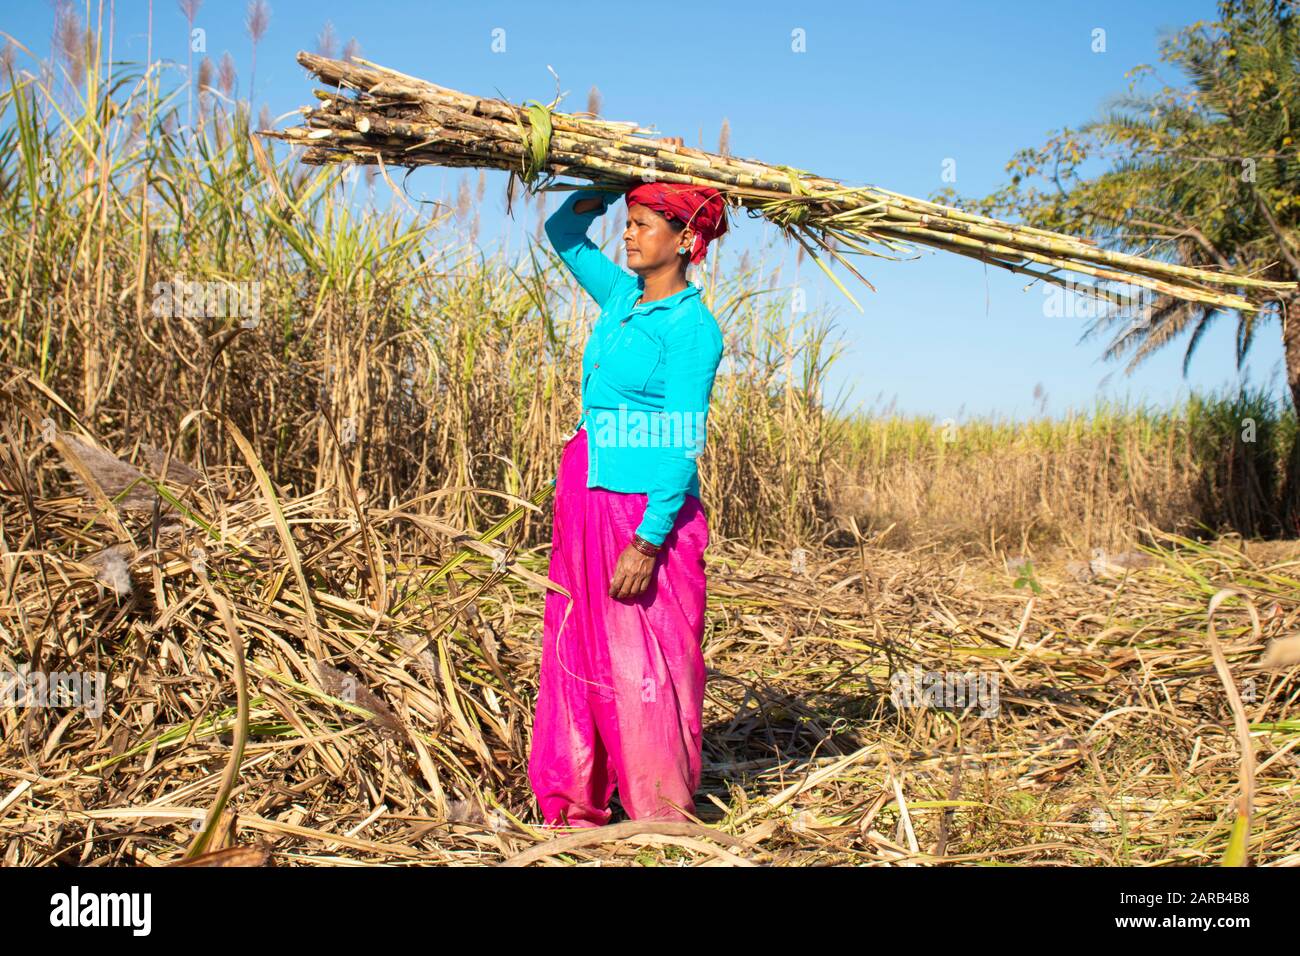 Diwara India Jan 11. 2020 : A rural woman with a sugarcane bundle on her head. Stock Photo